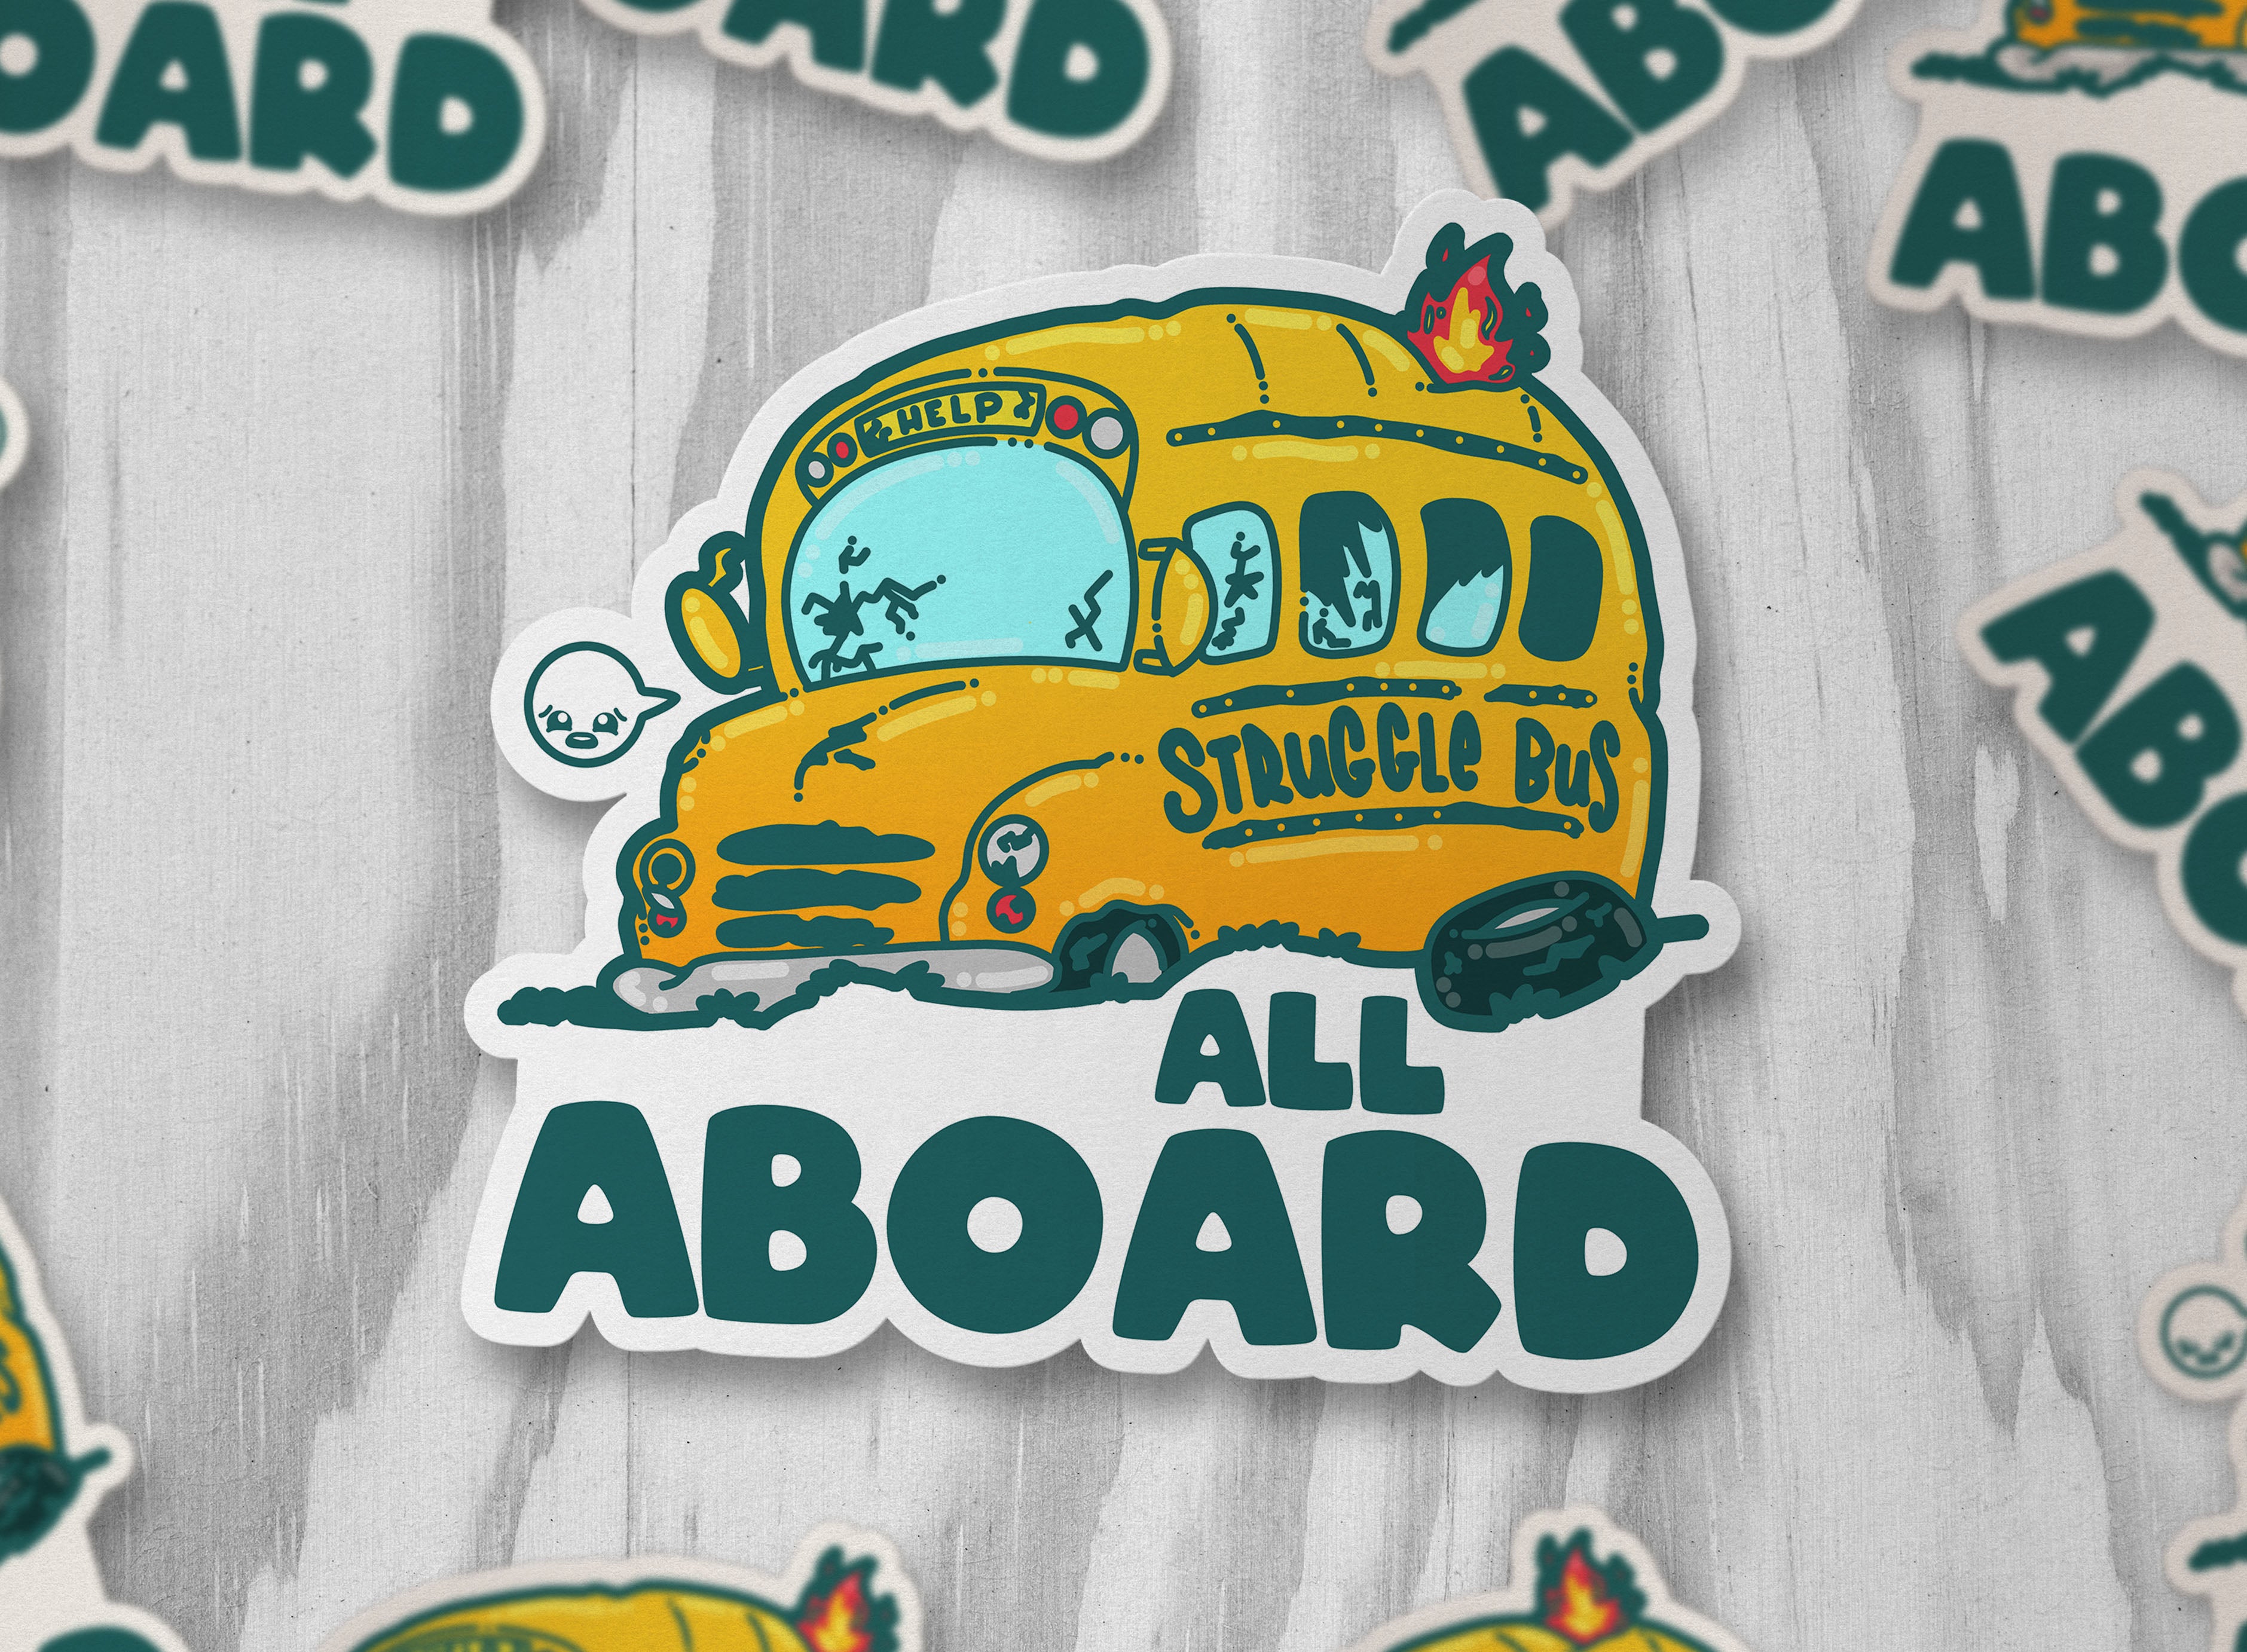 All Aboard the Struggle Bus - ChubbleGumLLC